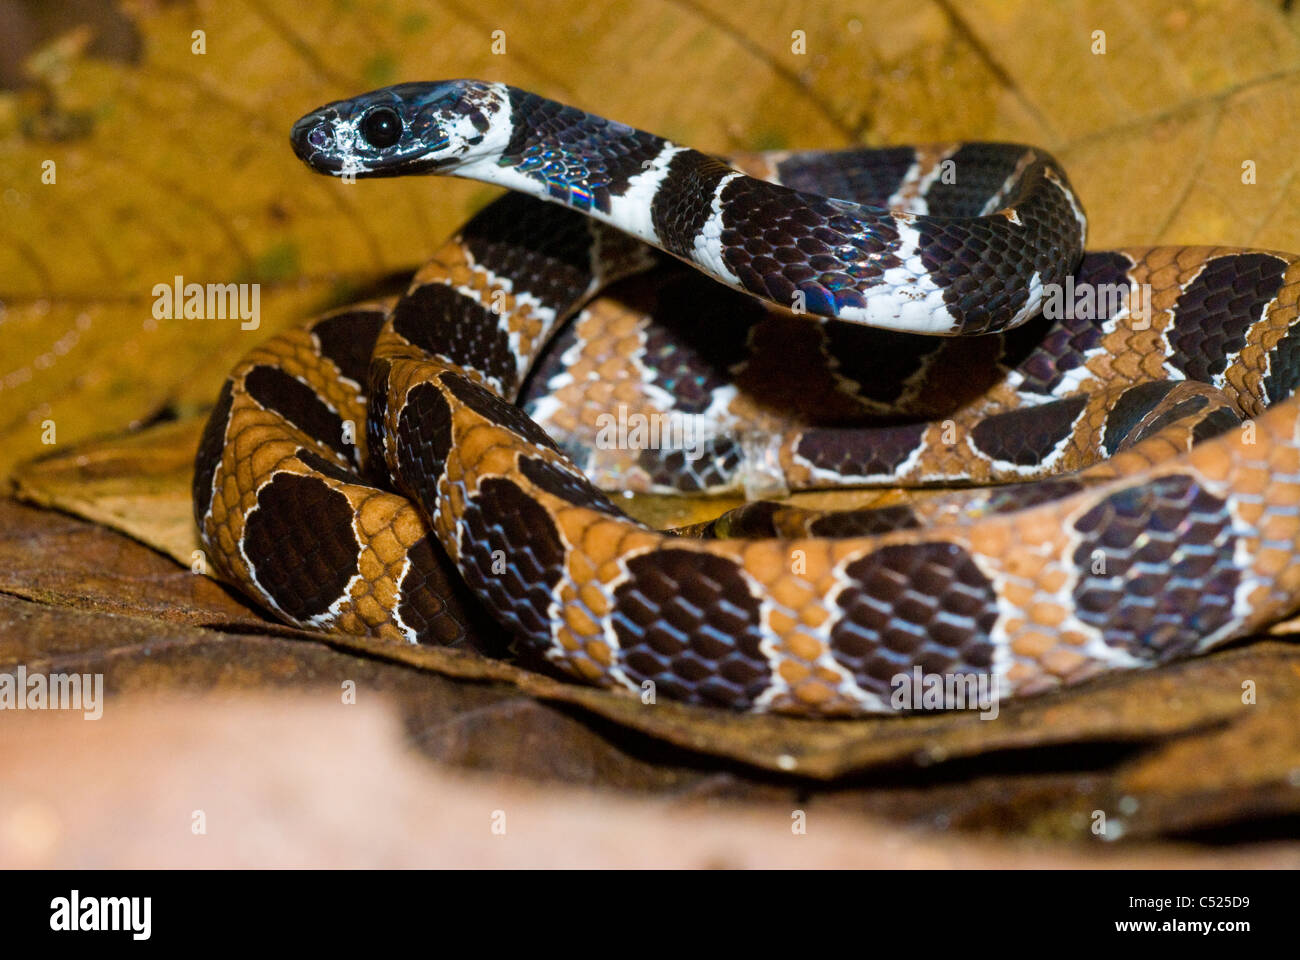 Sete ornati snake (Dipsas catysbyi) aka lumaca Serpente Mangiare Foto Stock